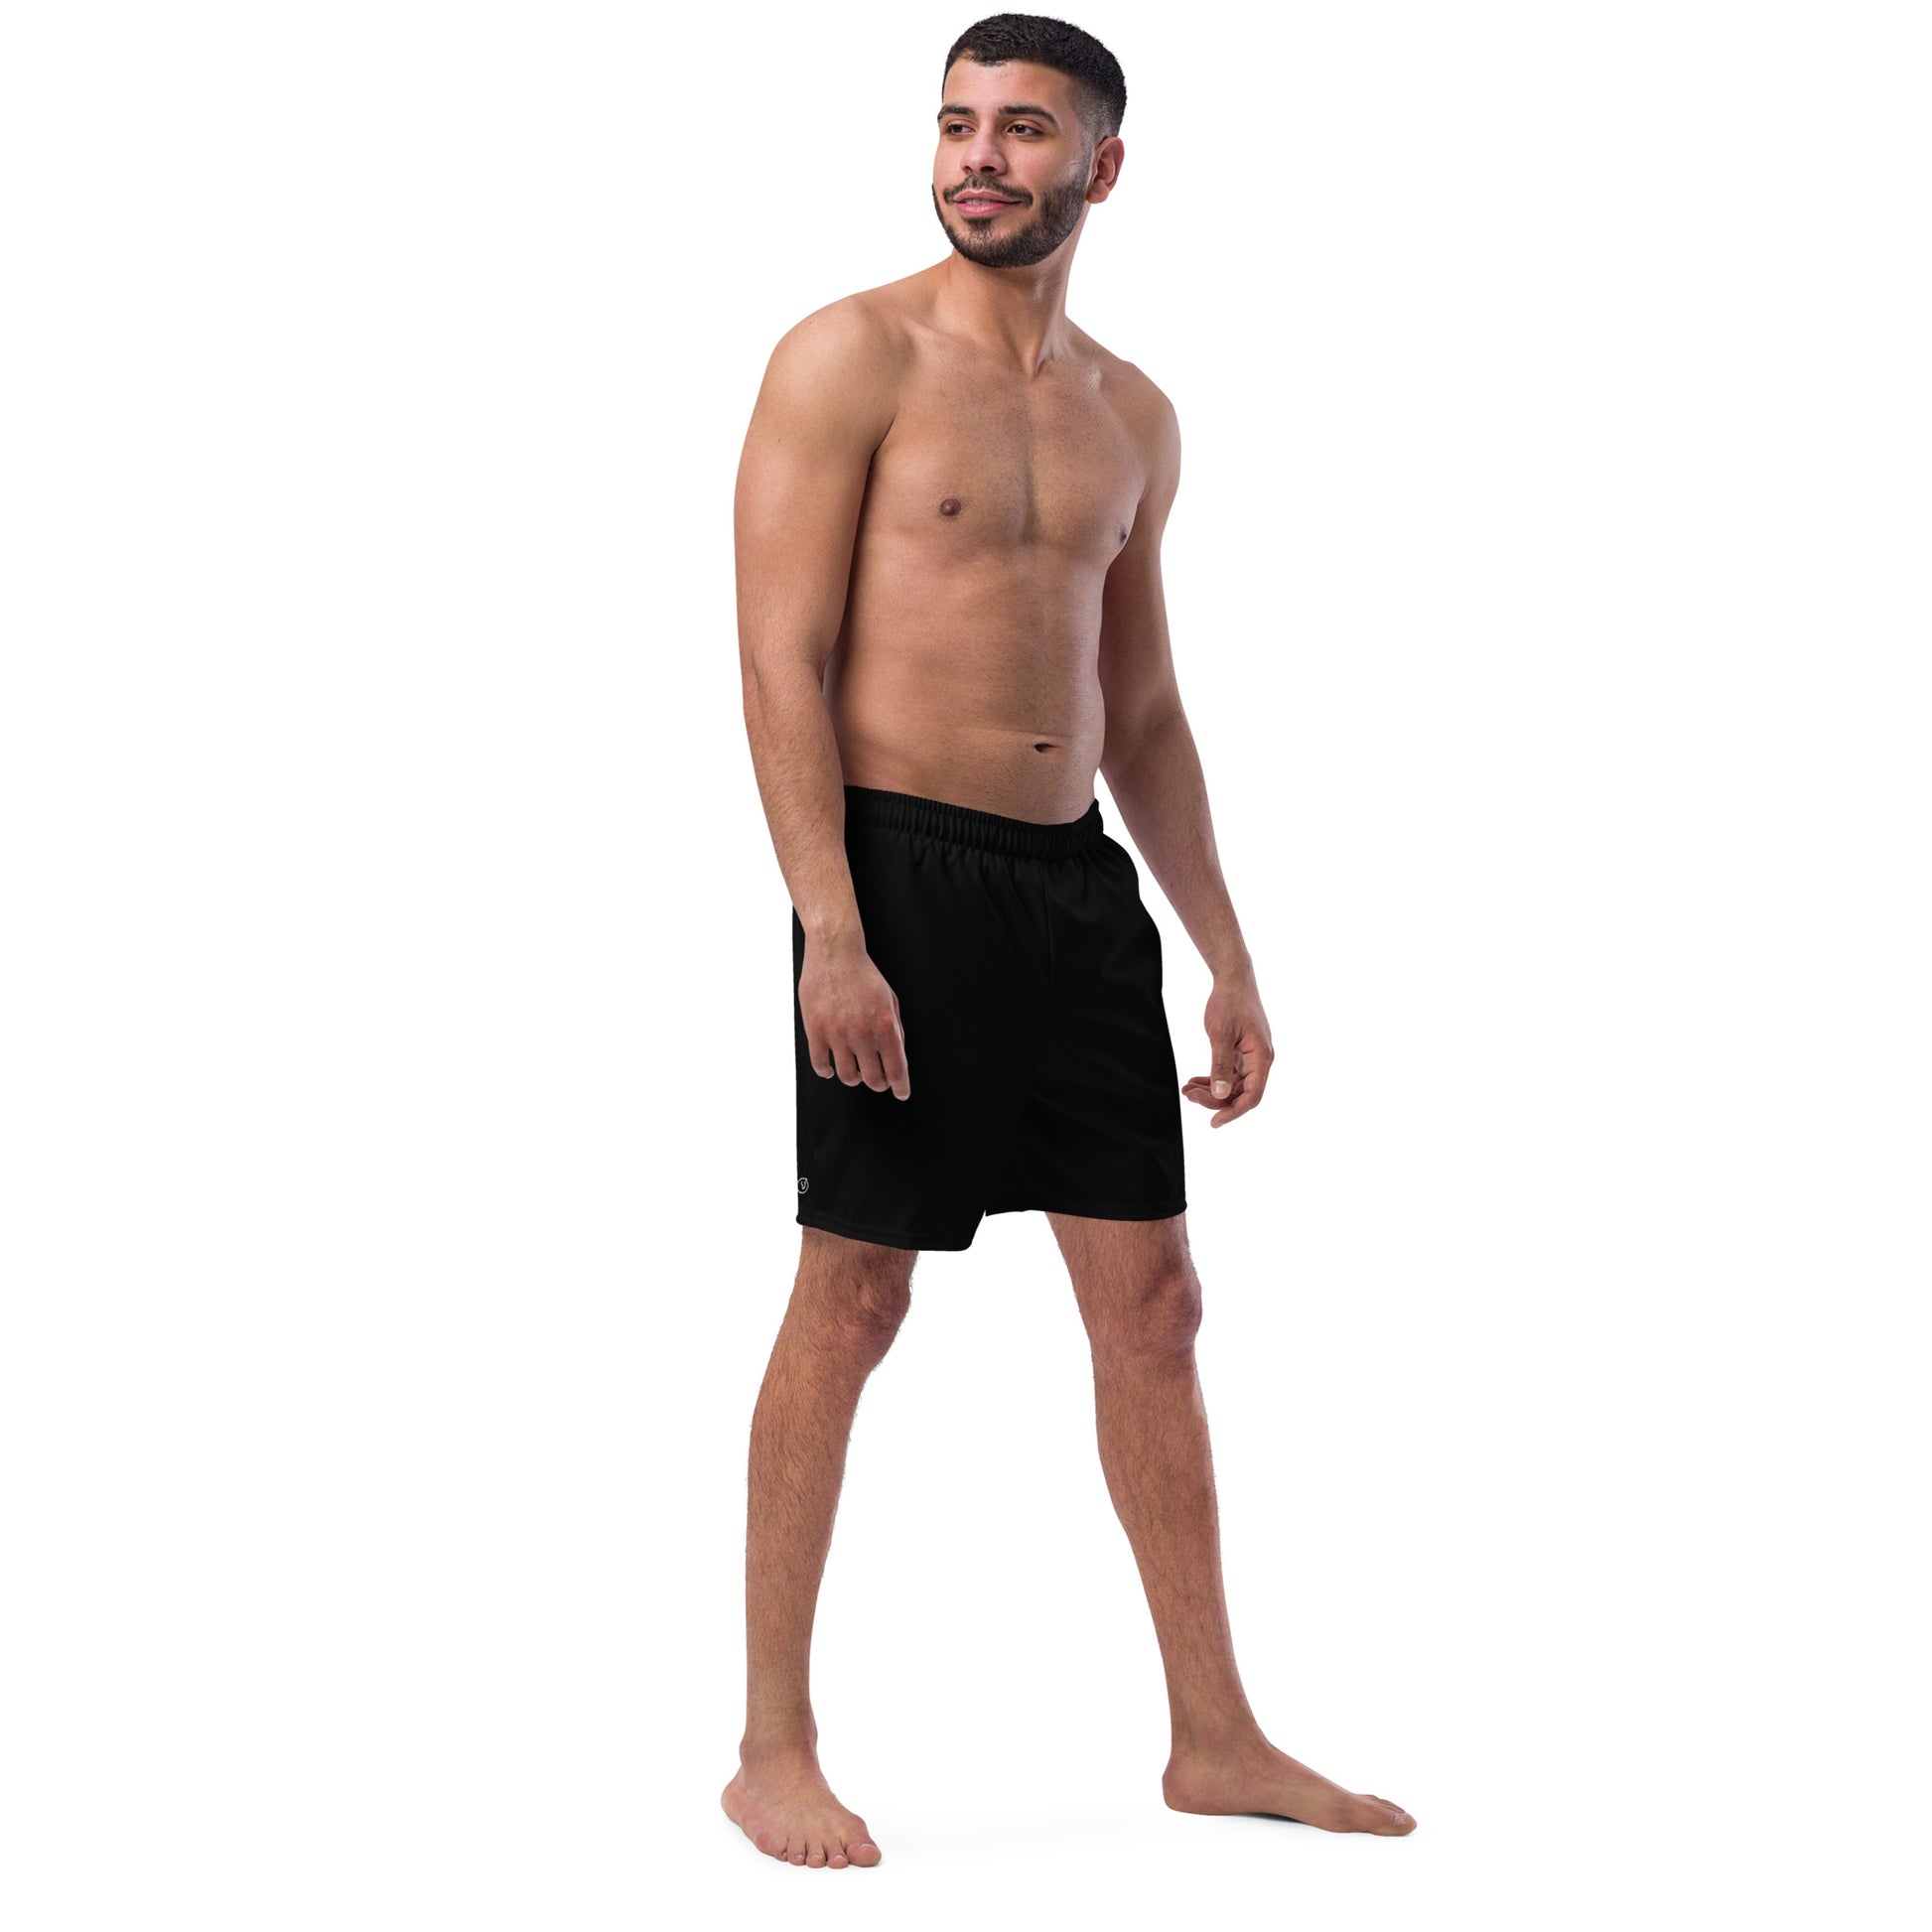 Humble Sportswear, men's Color Match black moisture-wicking swim trunks 